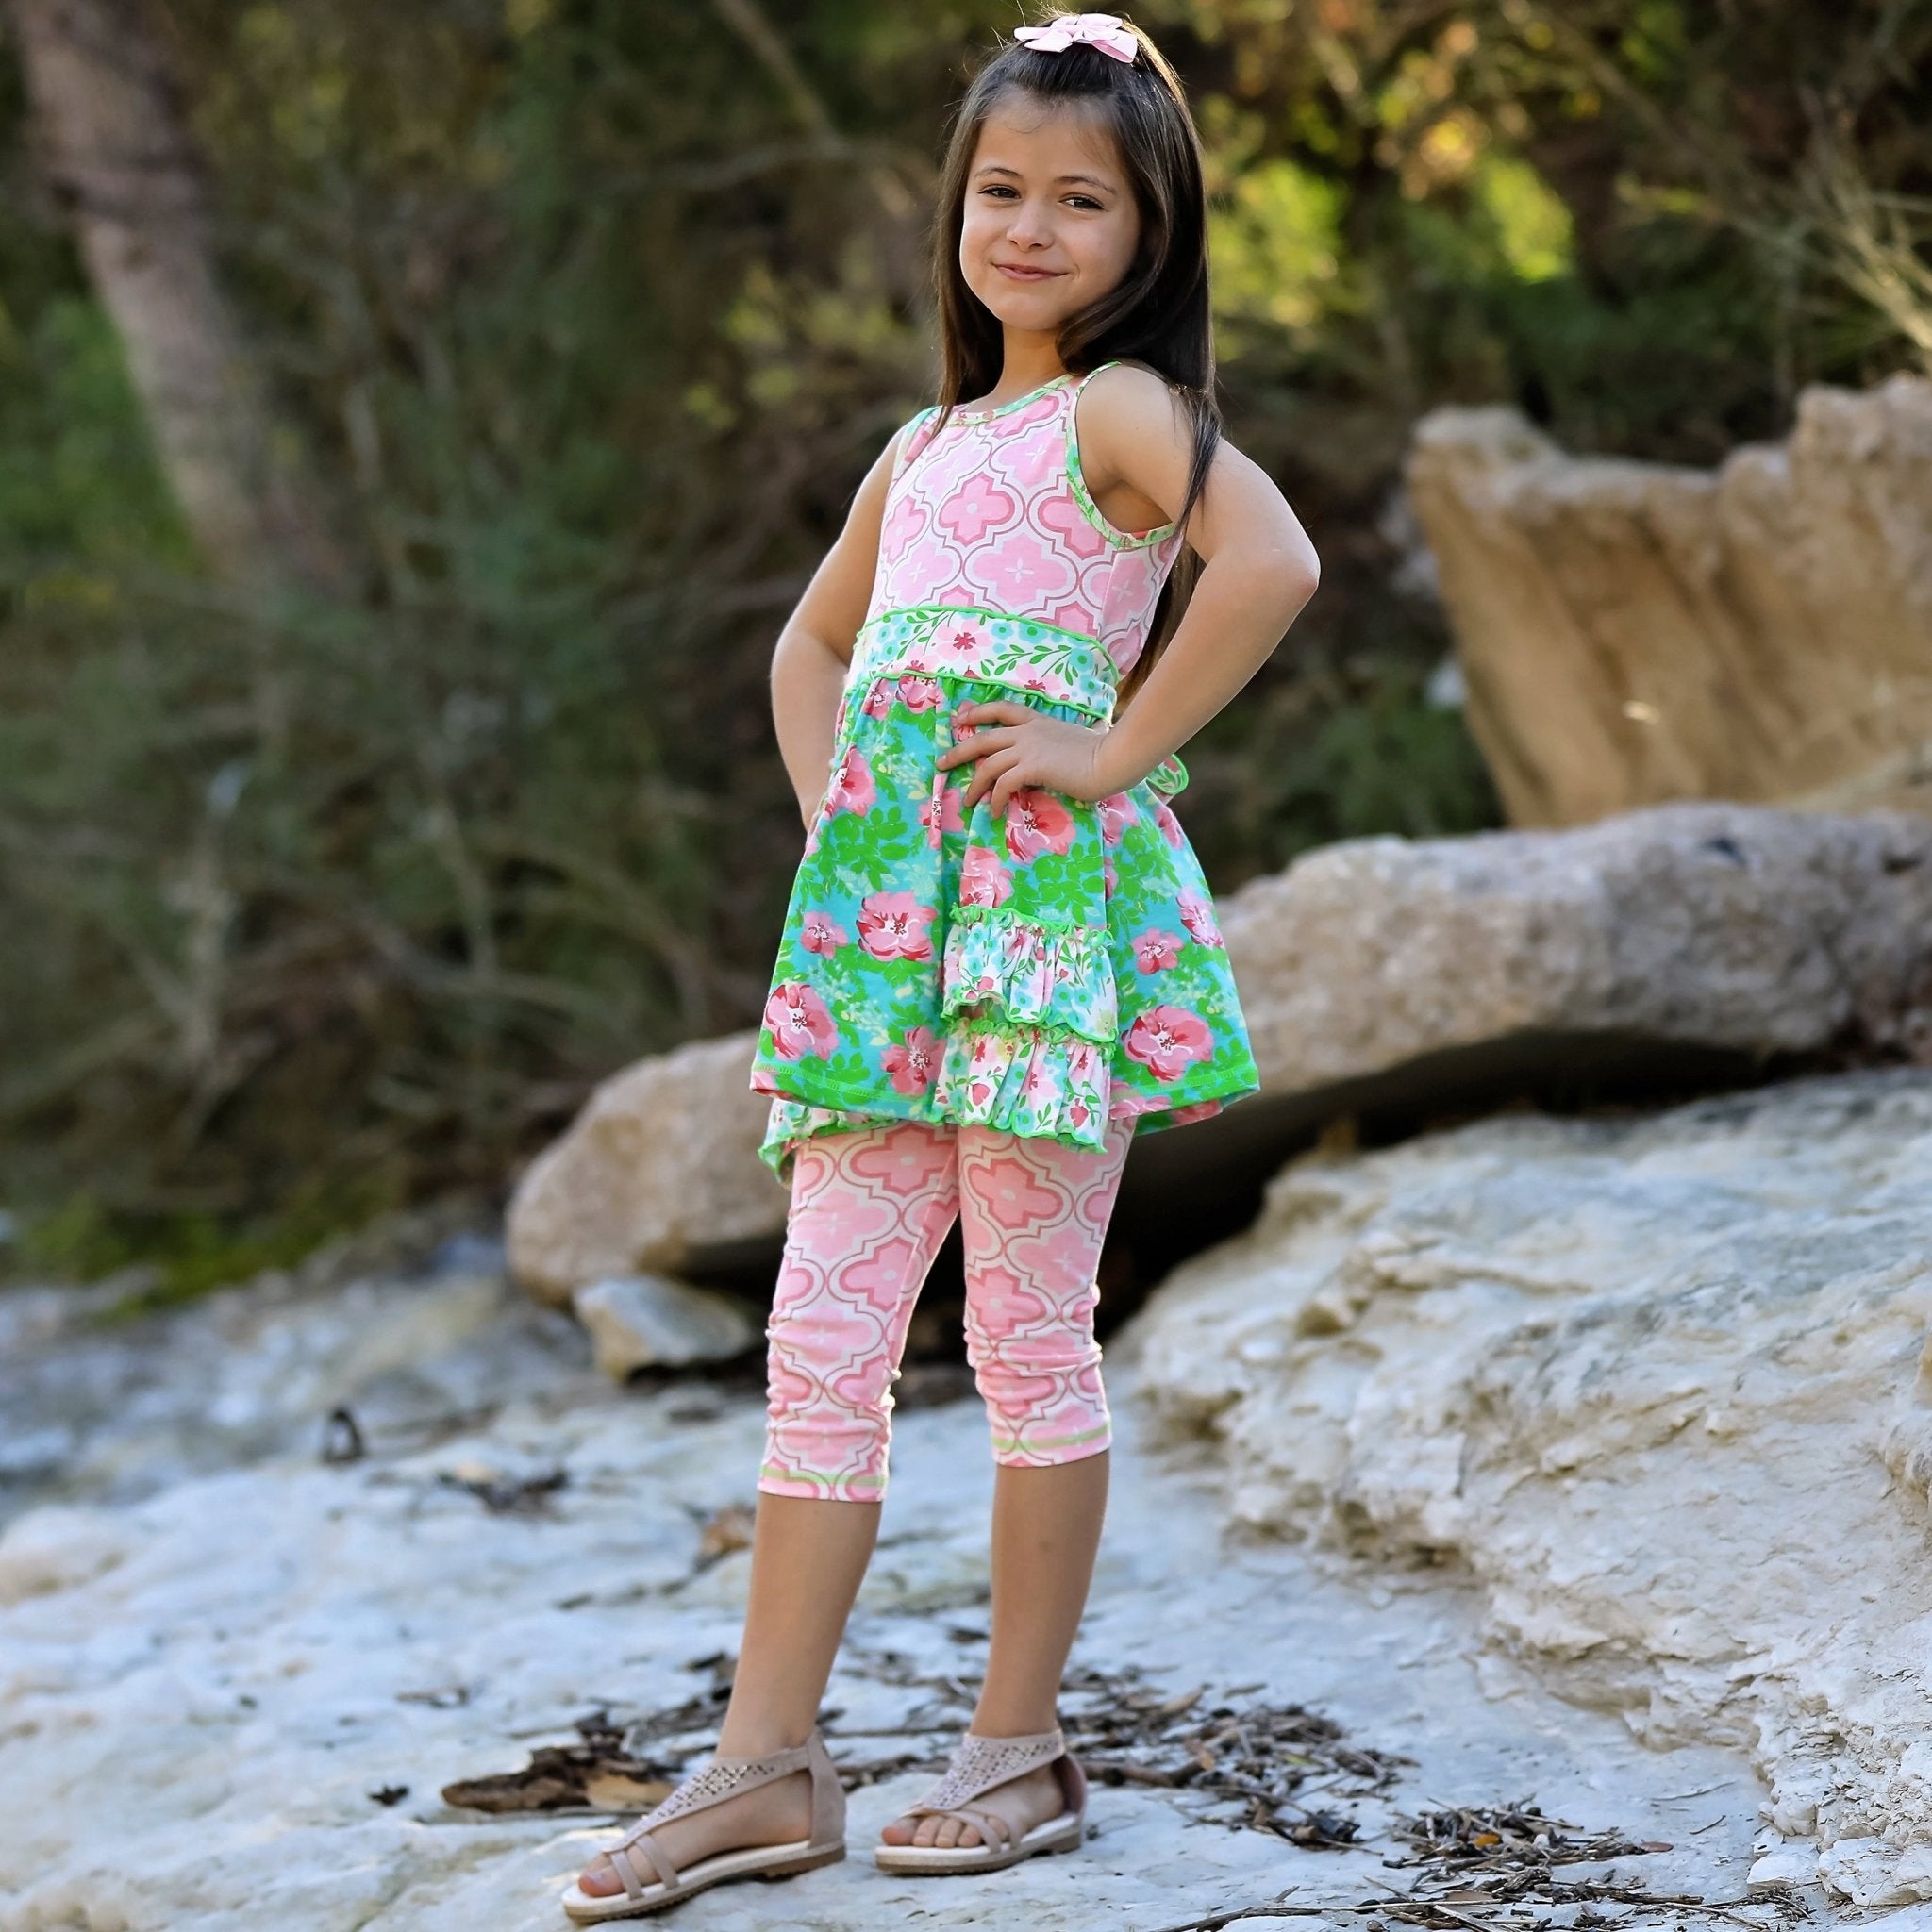 AnnLoren Little Toddler Big Girls' Floral Dress Leggings Boutique Clothing Set Spring Summer - KME means the very best